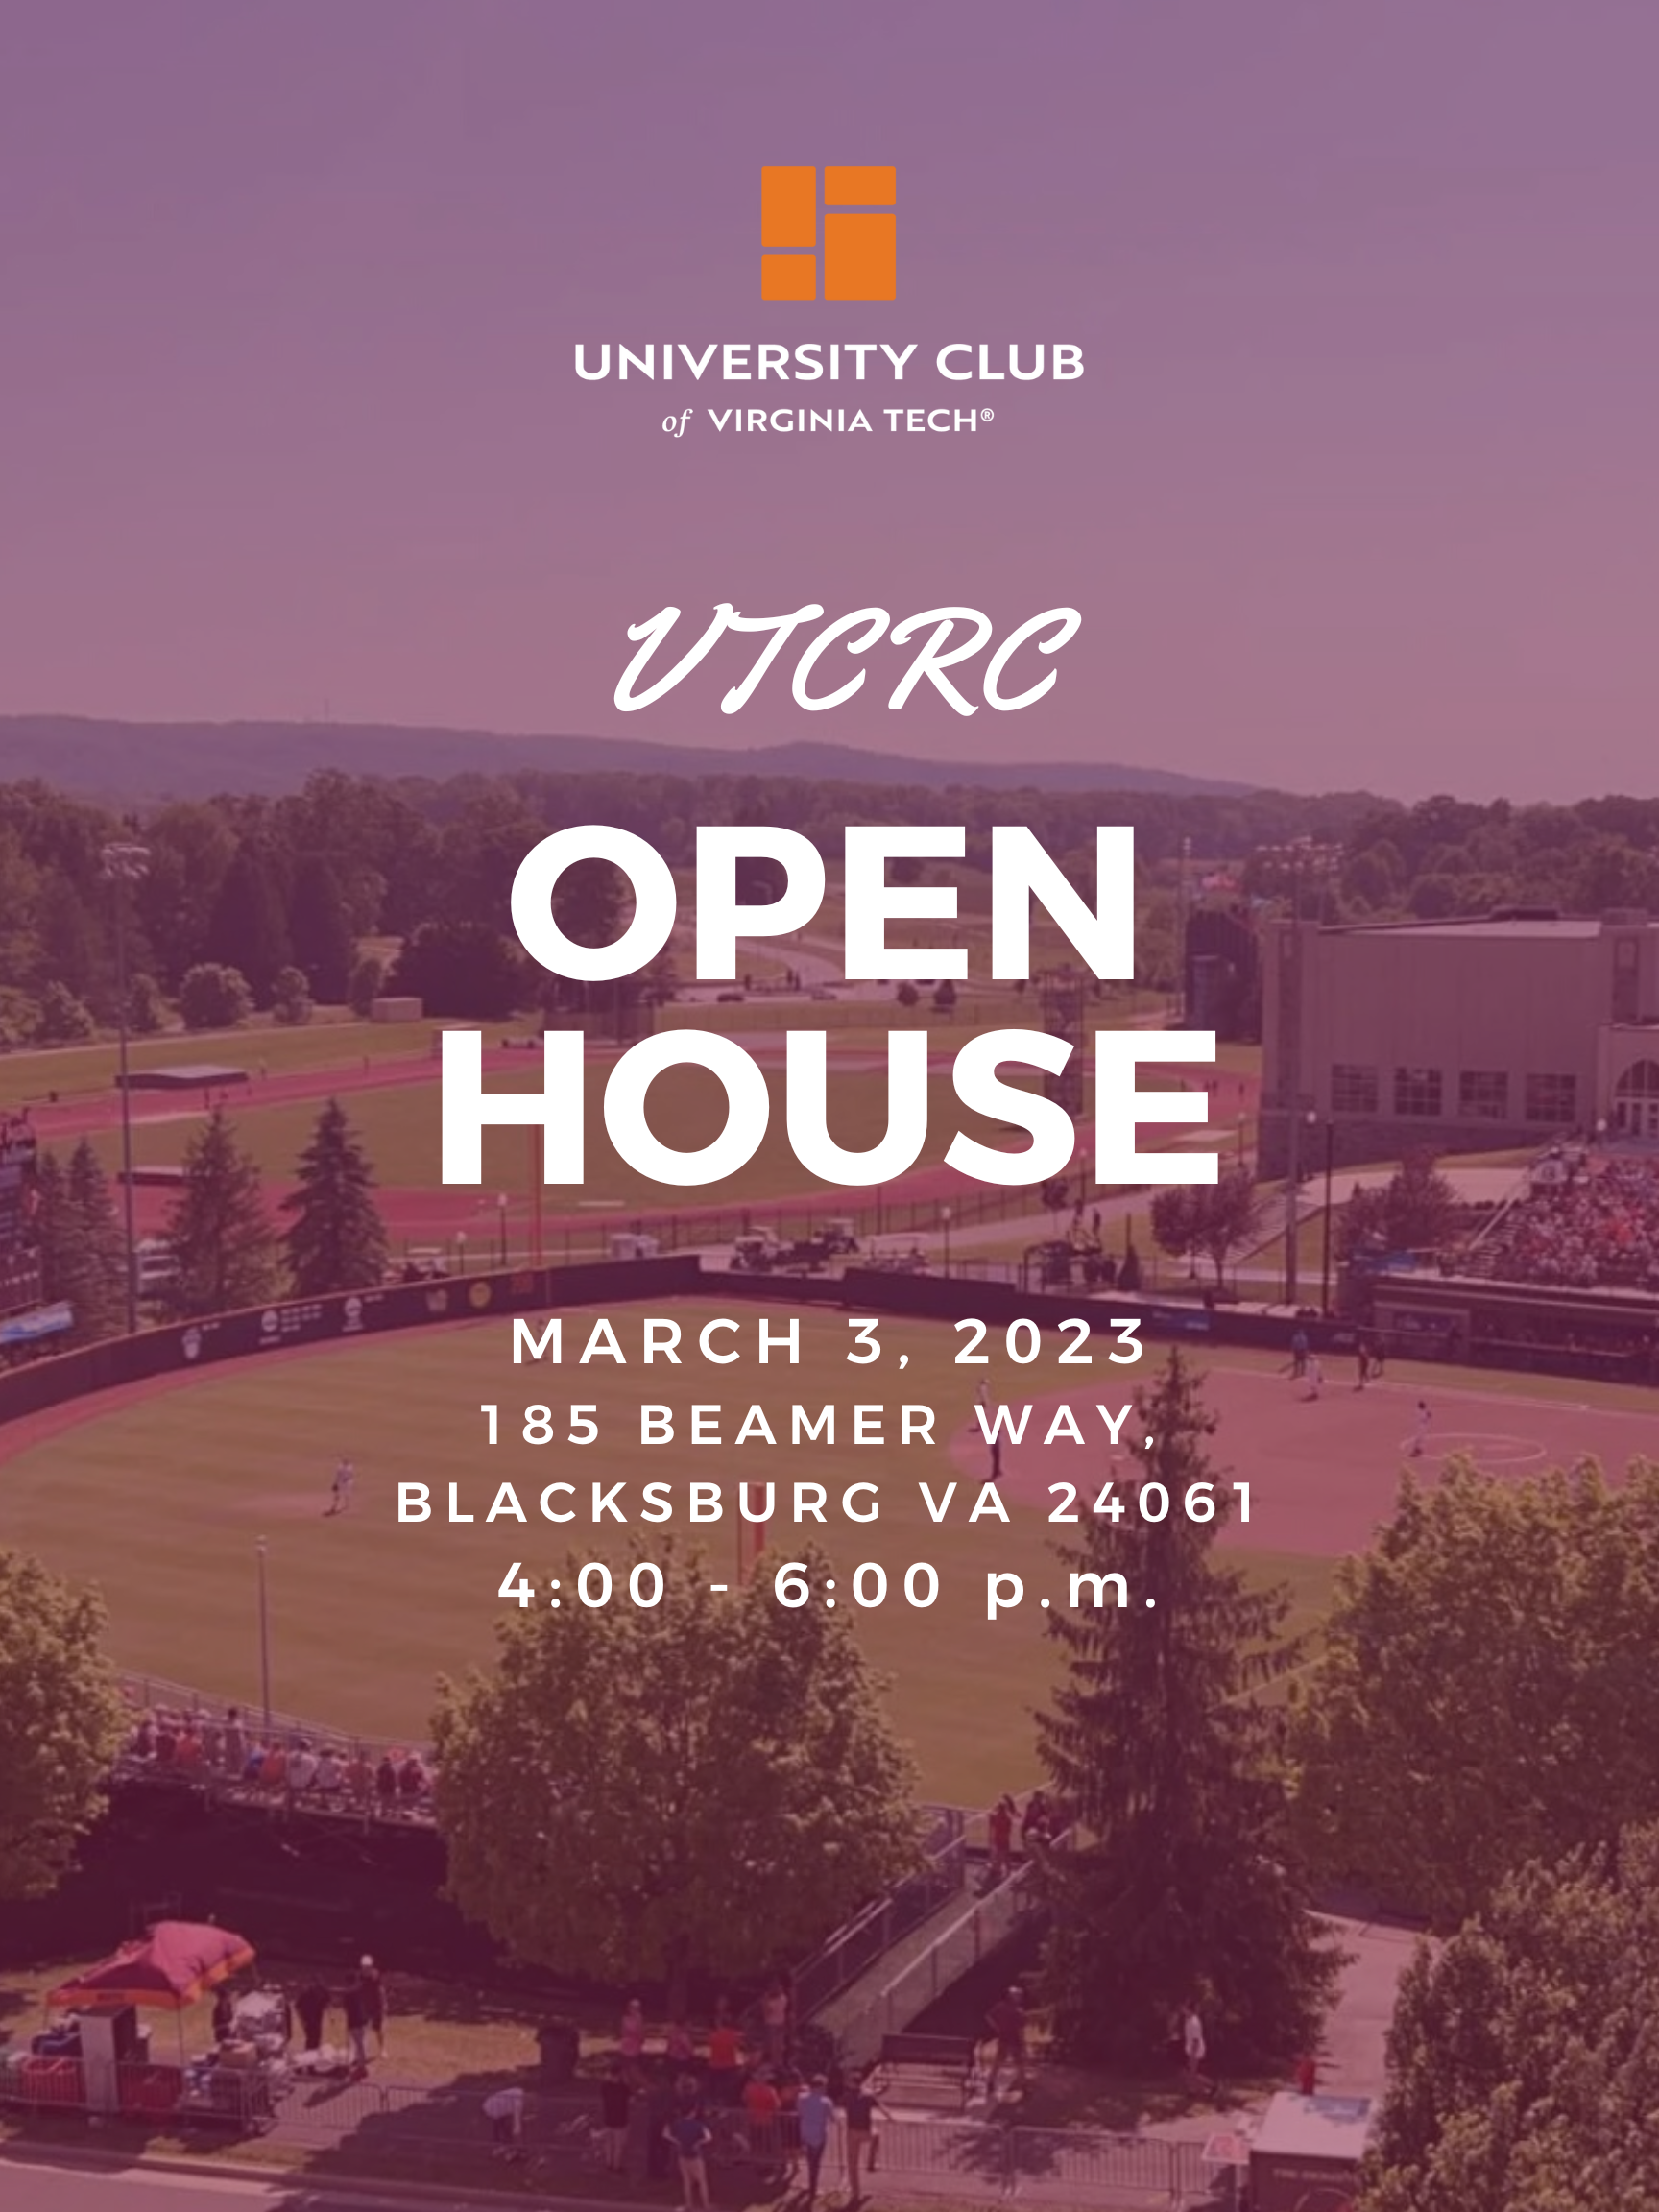 University Club VTCRC Open House